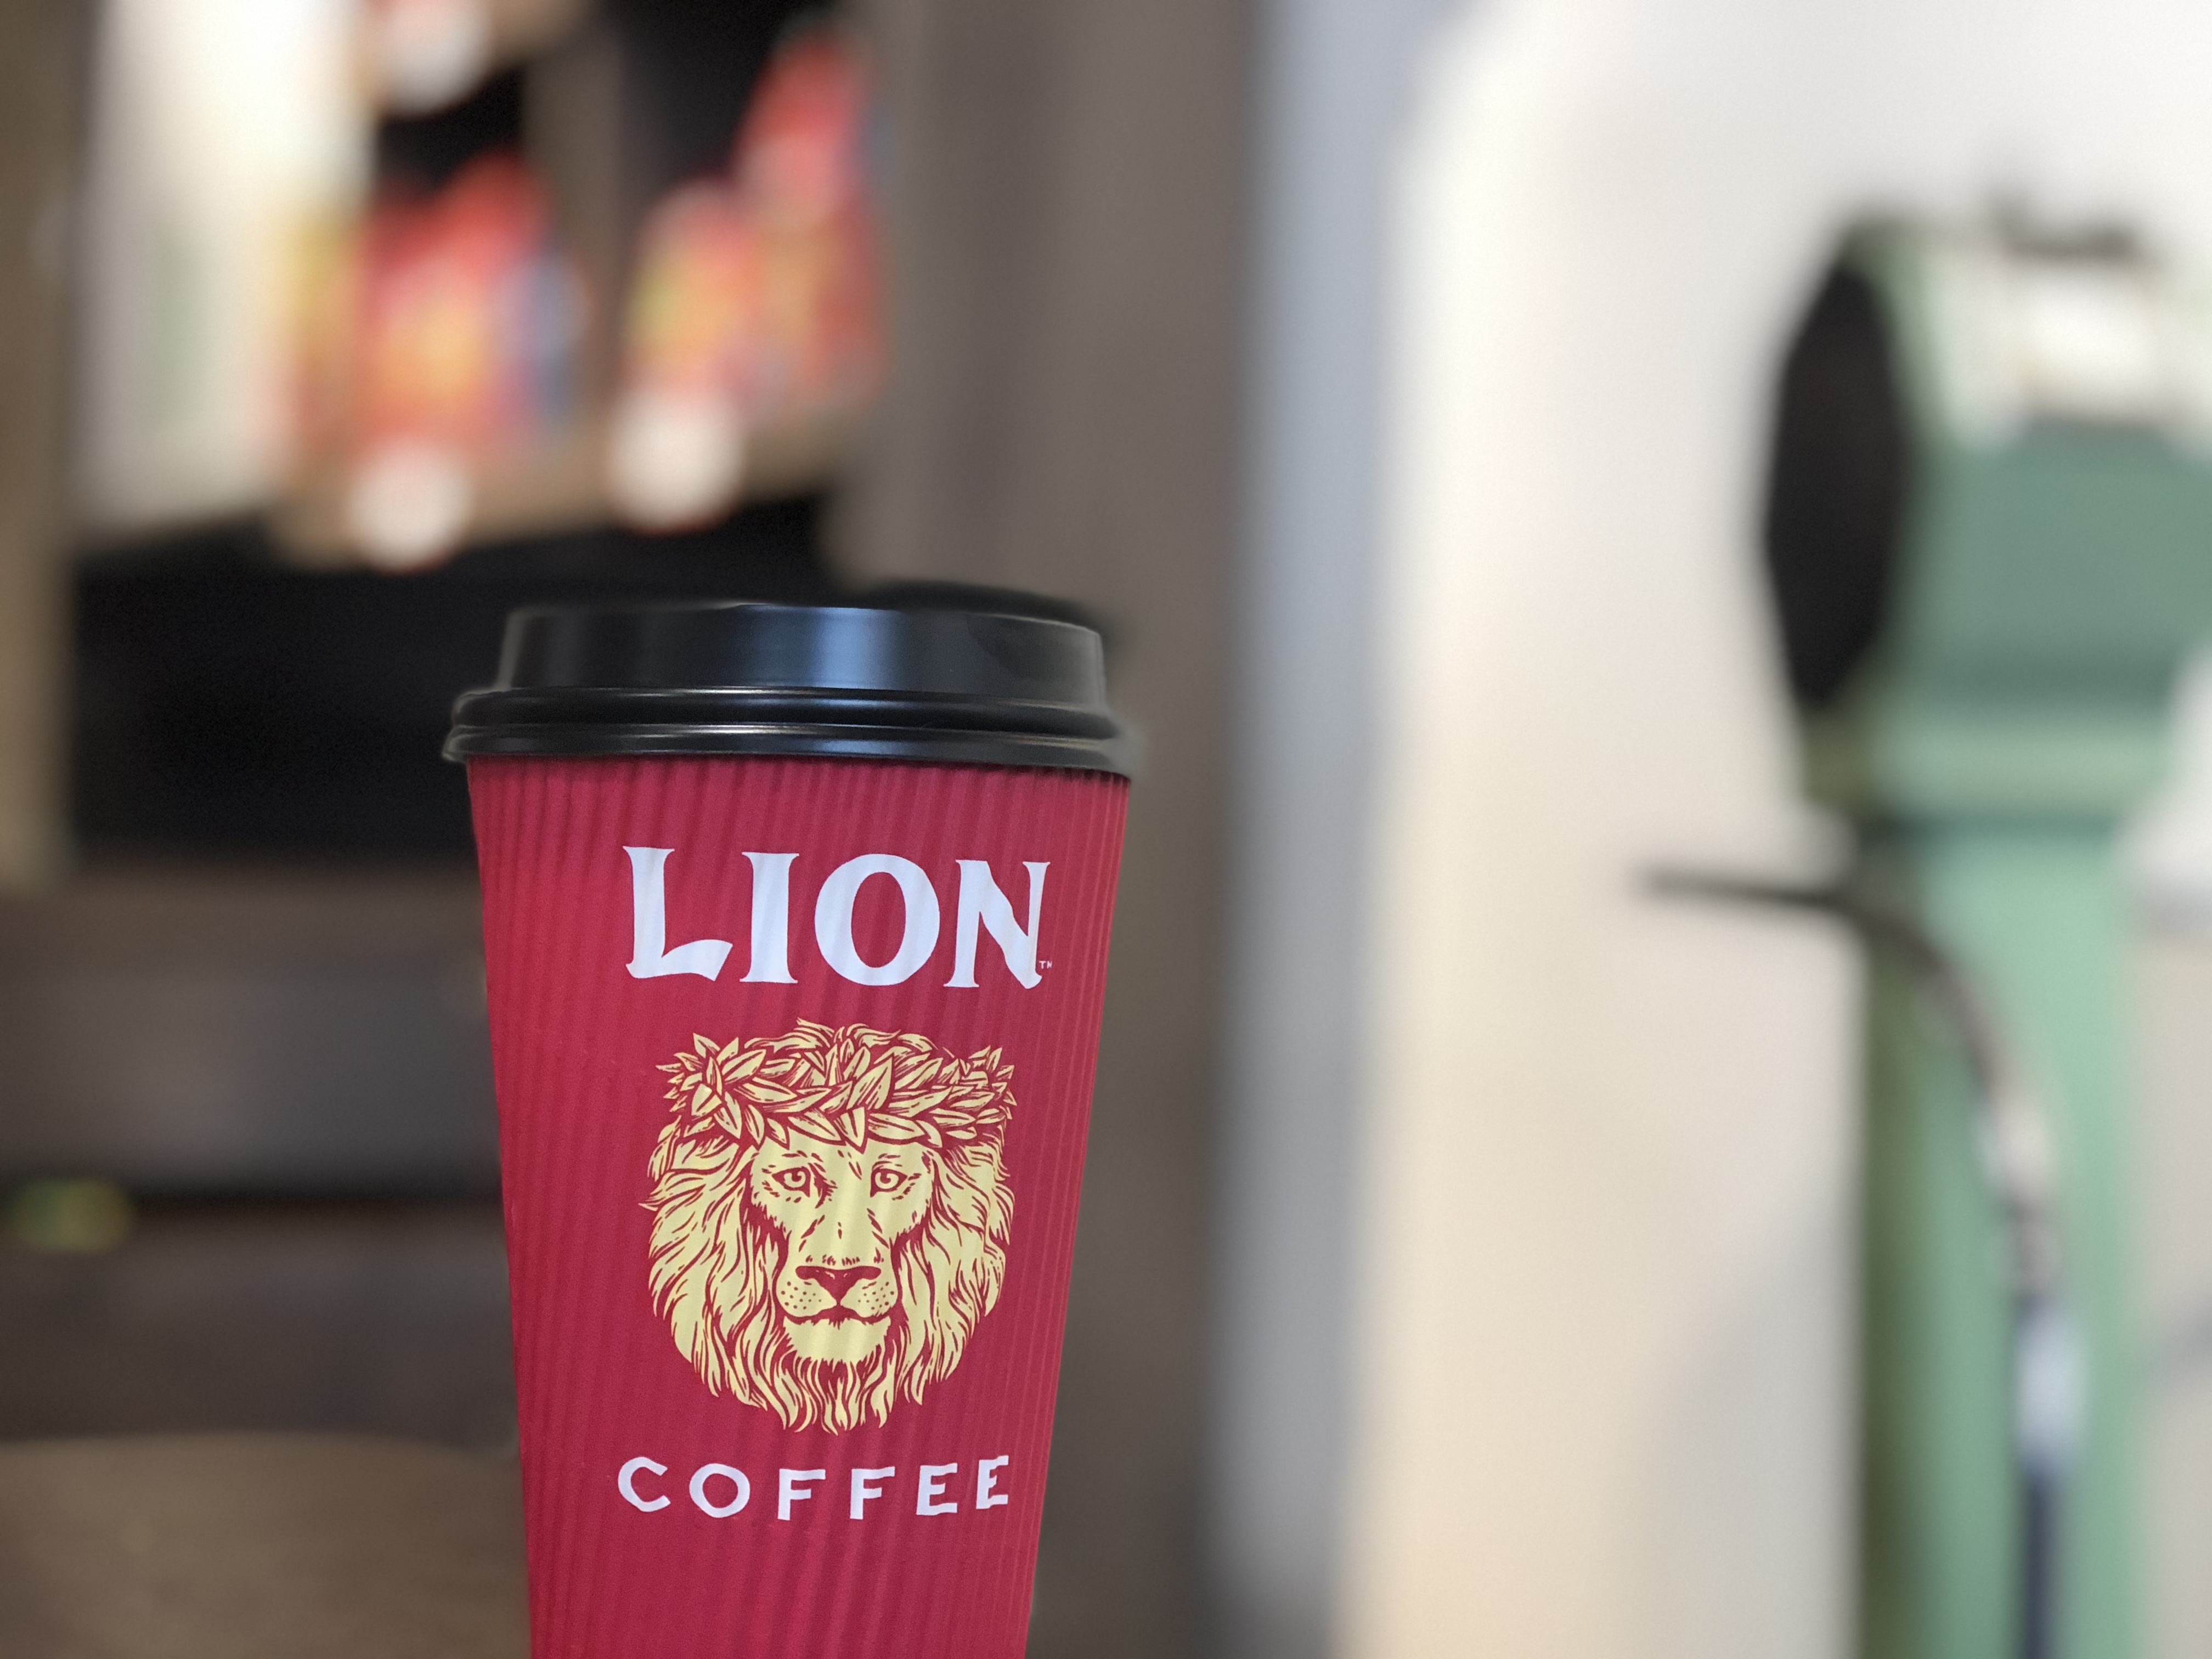 Lion coffee.